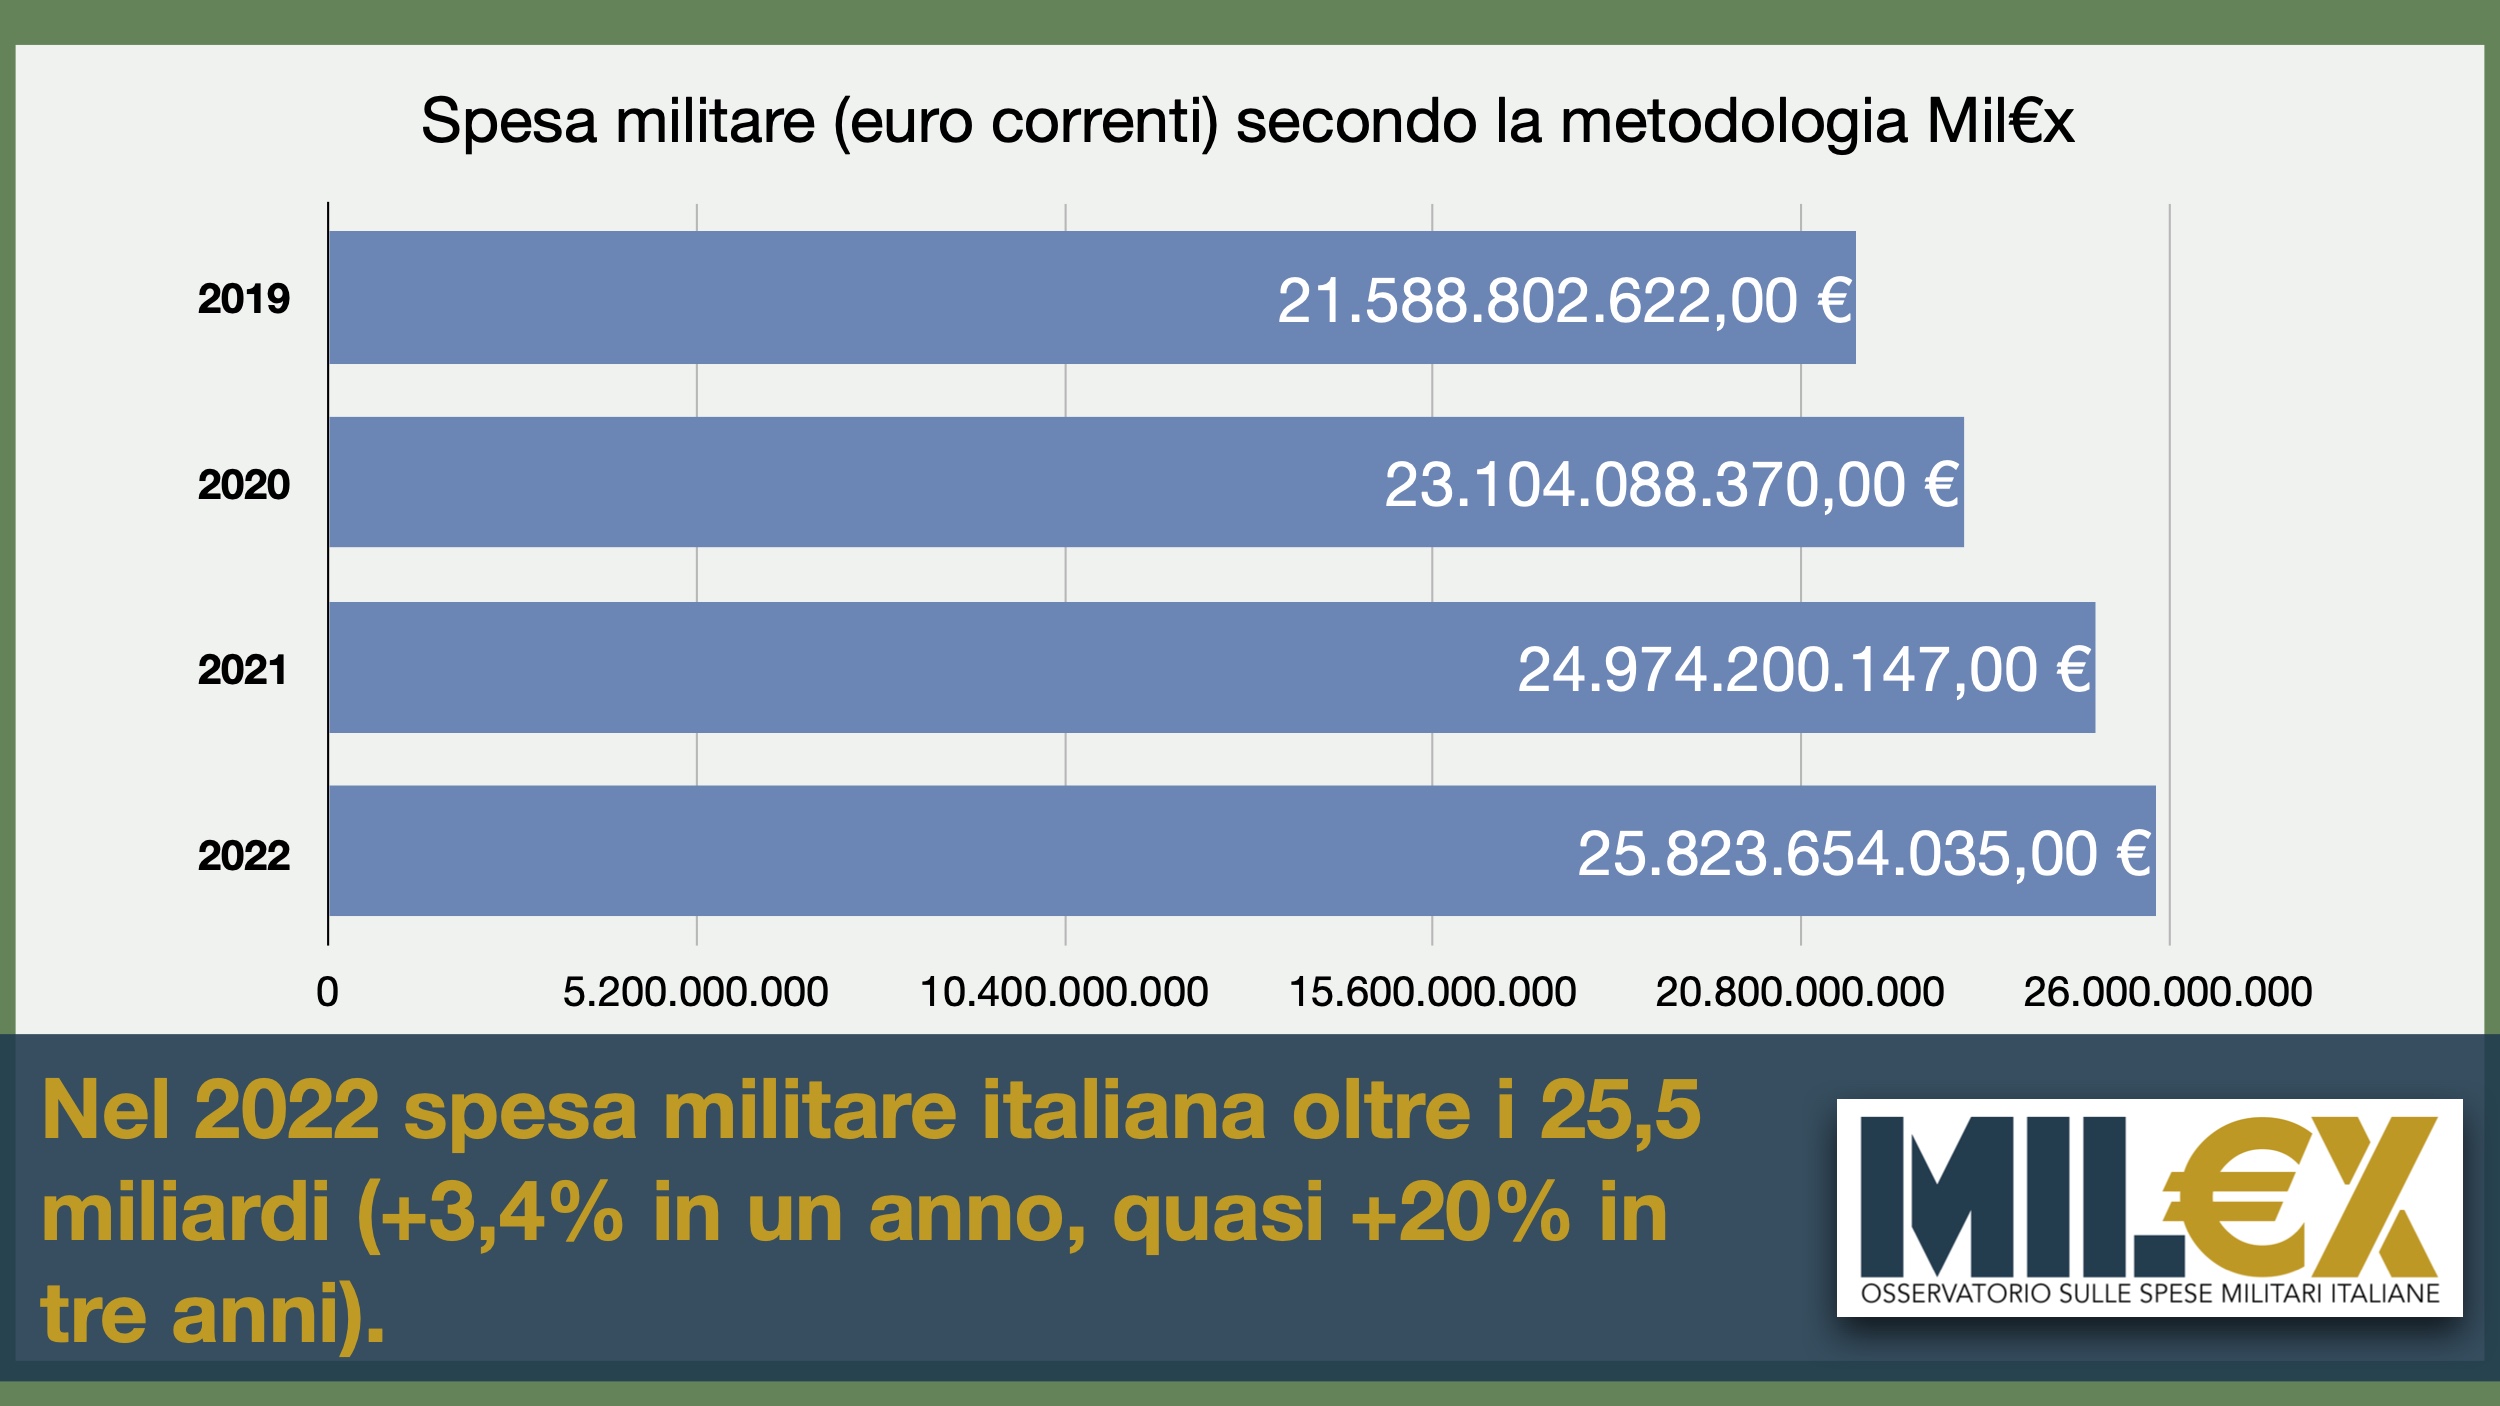 meme-spese-militari-graph-2022-Milex